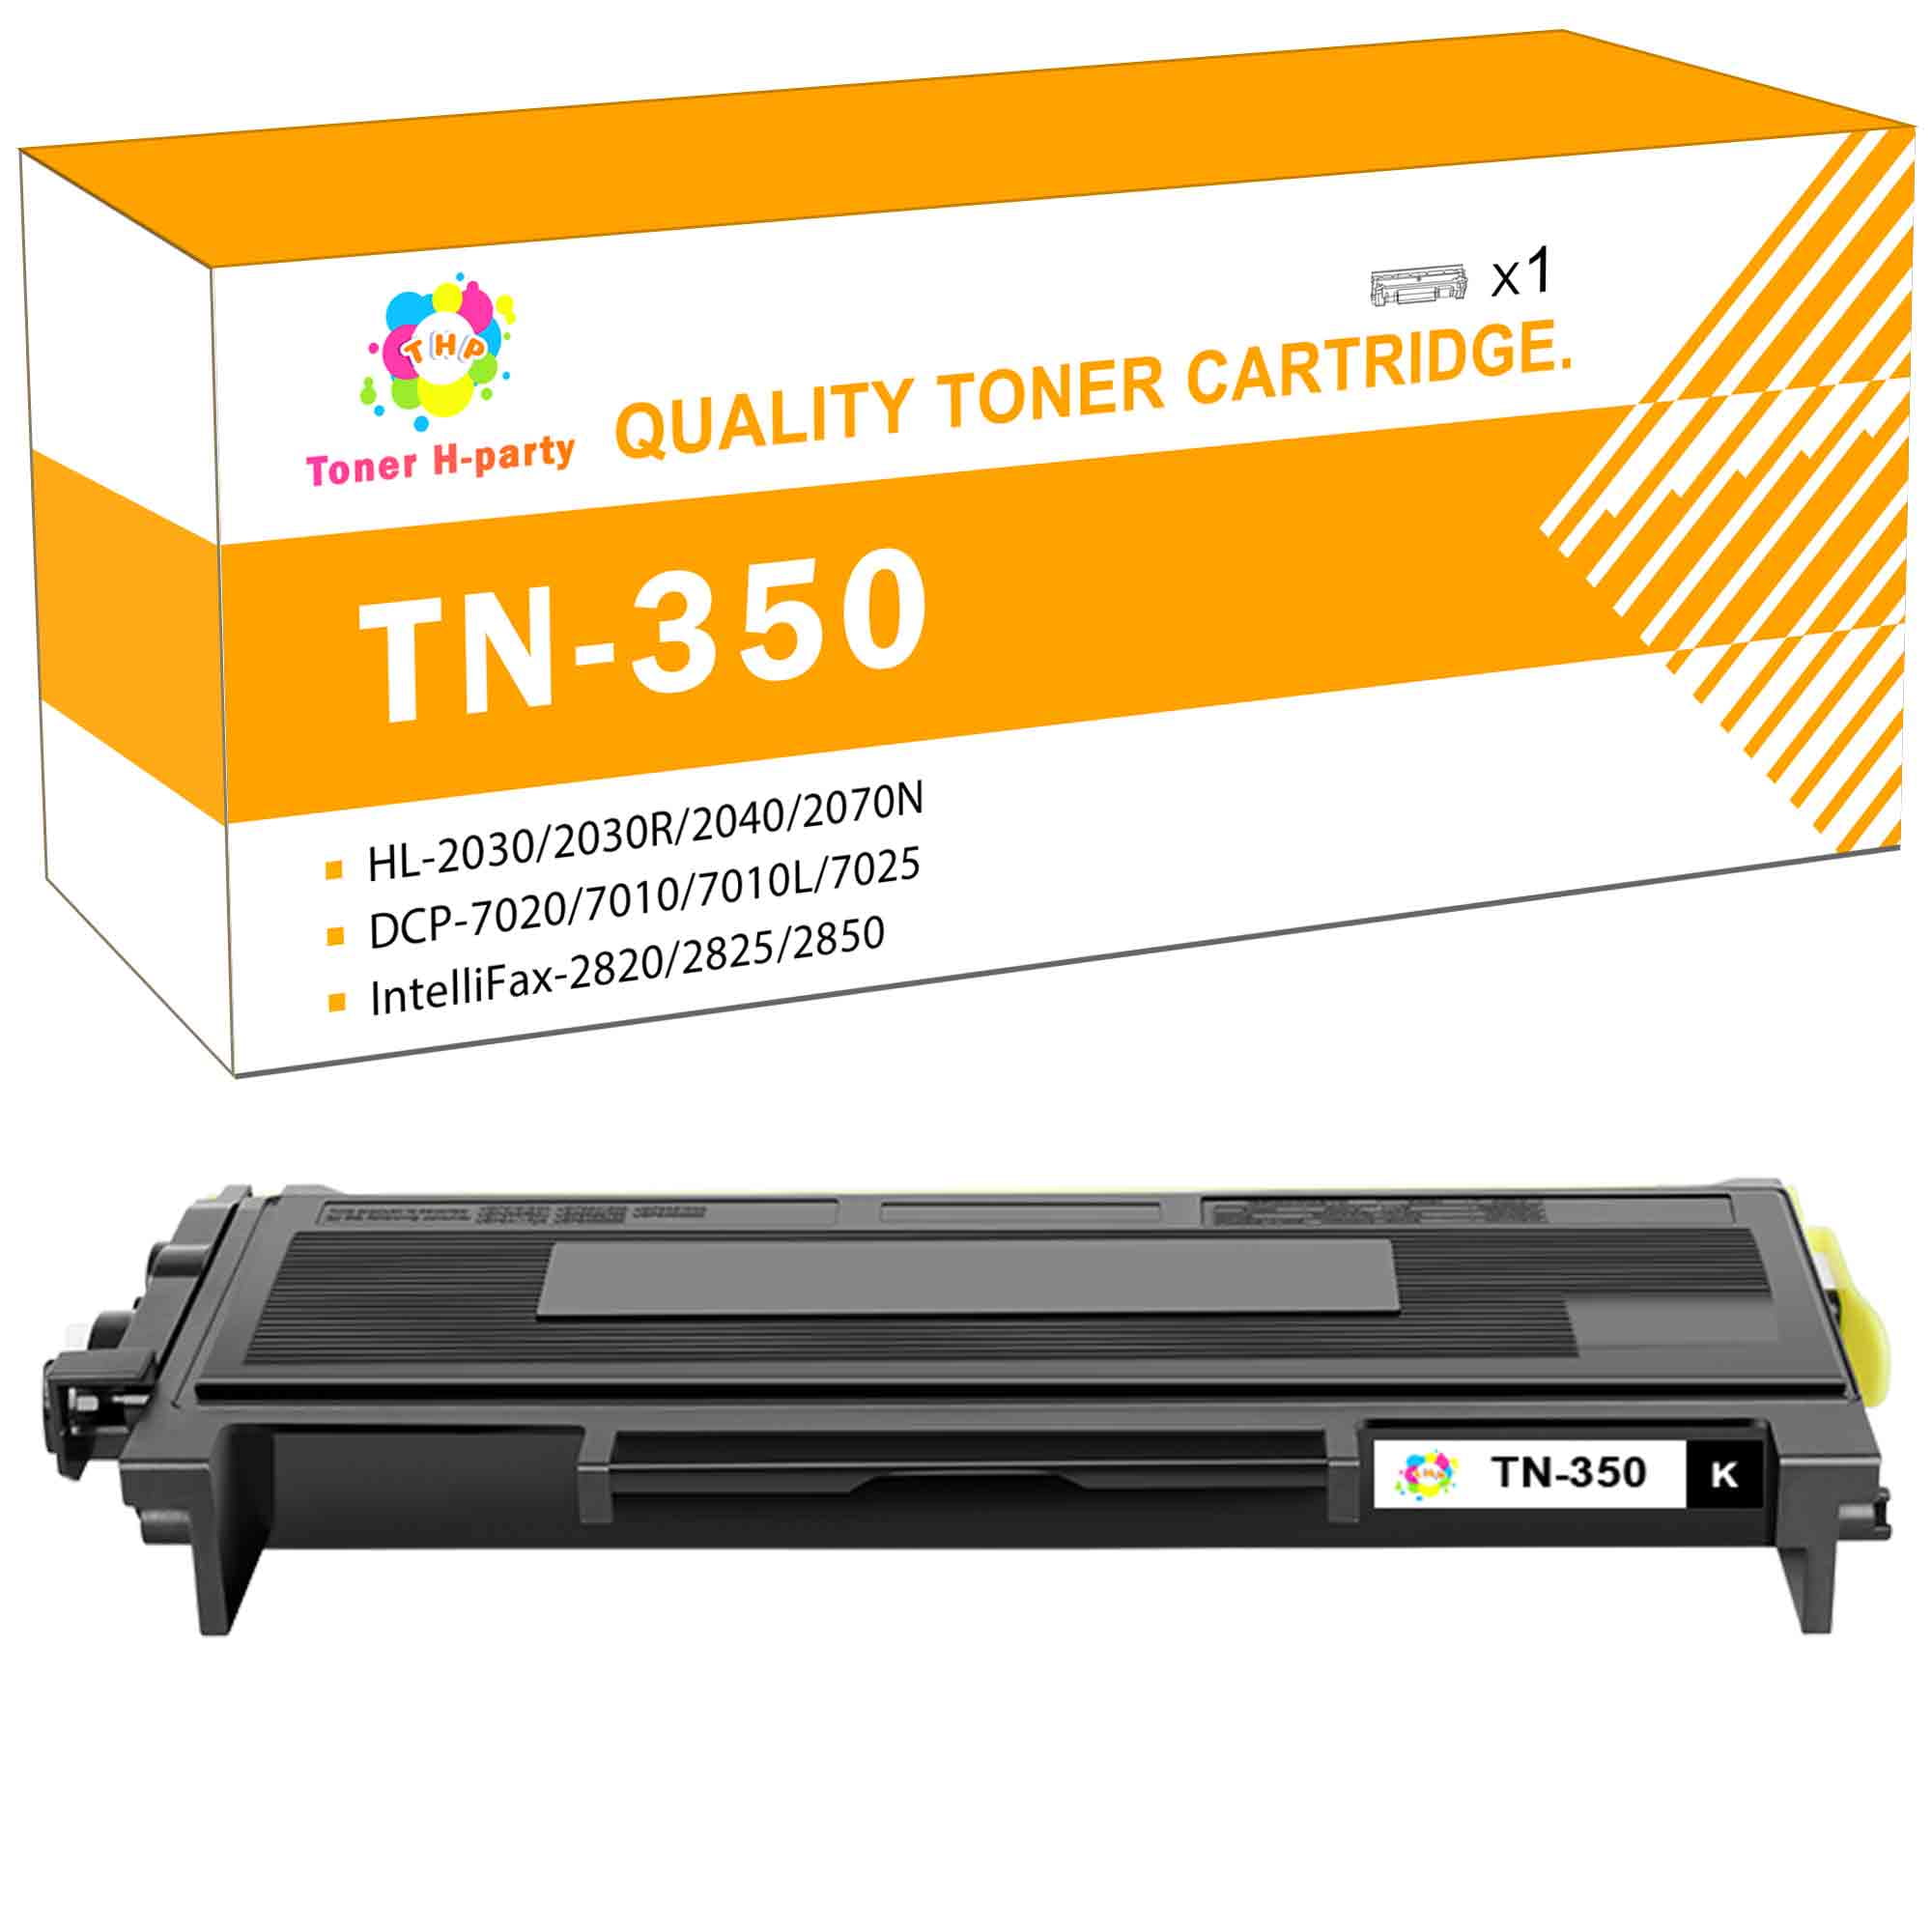 Toner H-Party Compatible Toner Replacement for TN350 TN-350 HL-2030 2040 2070 2035 2037 2037E MFC-7220 7820N DCP-7010 7020 (Black, 1 Pack) Walmart.com